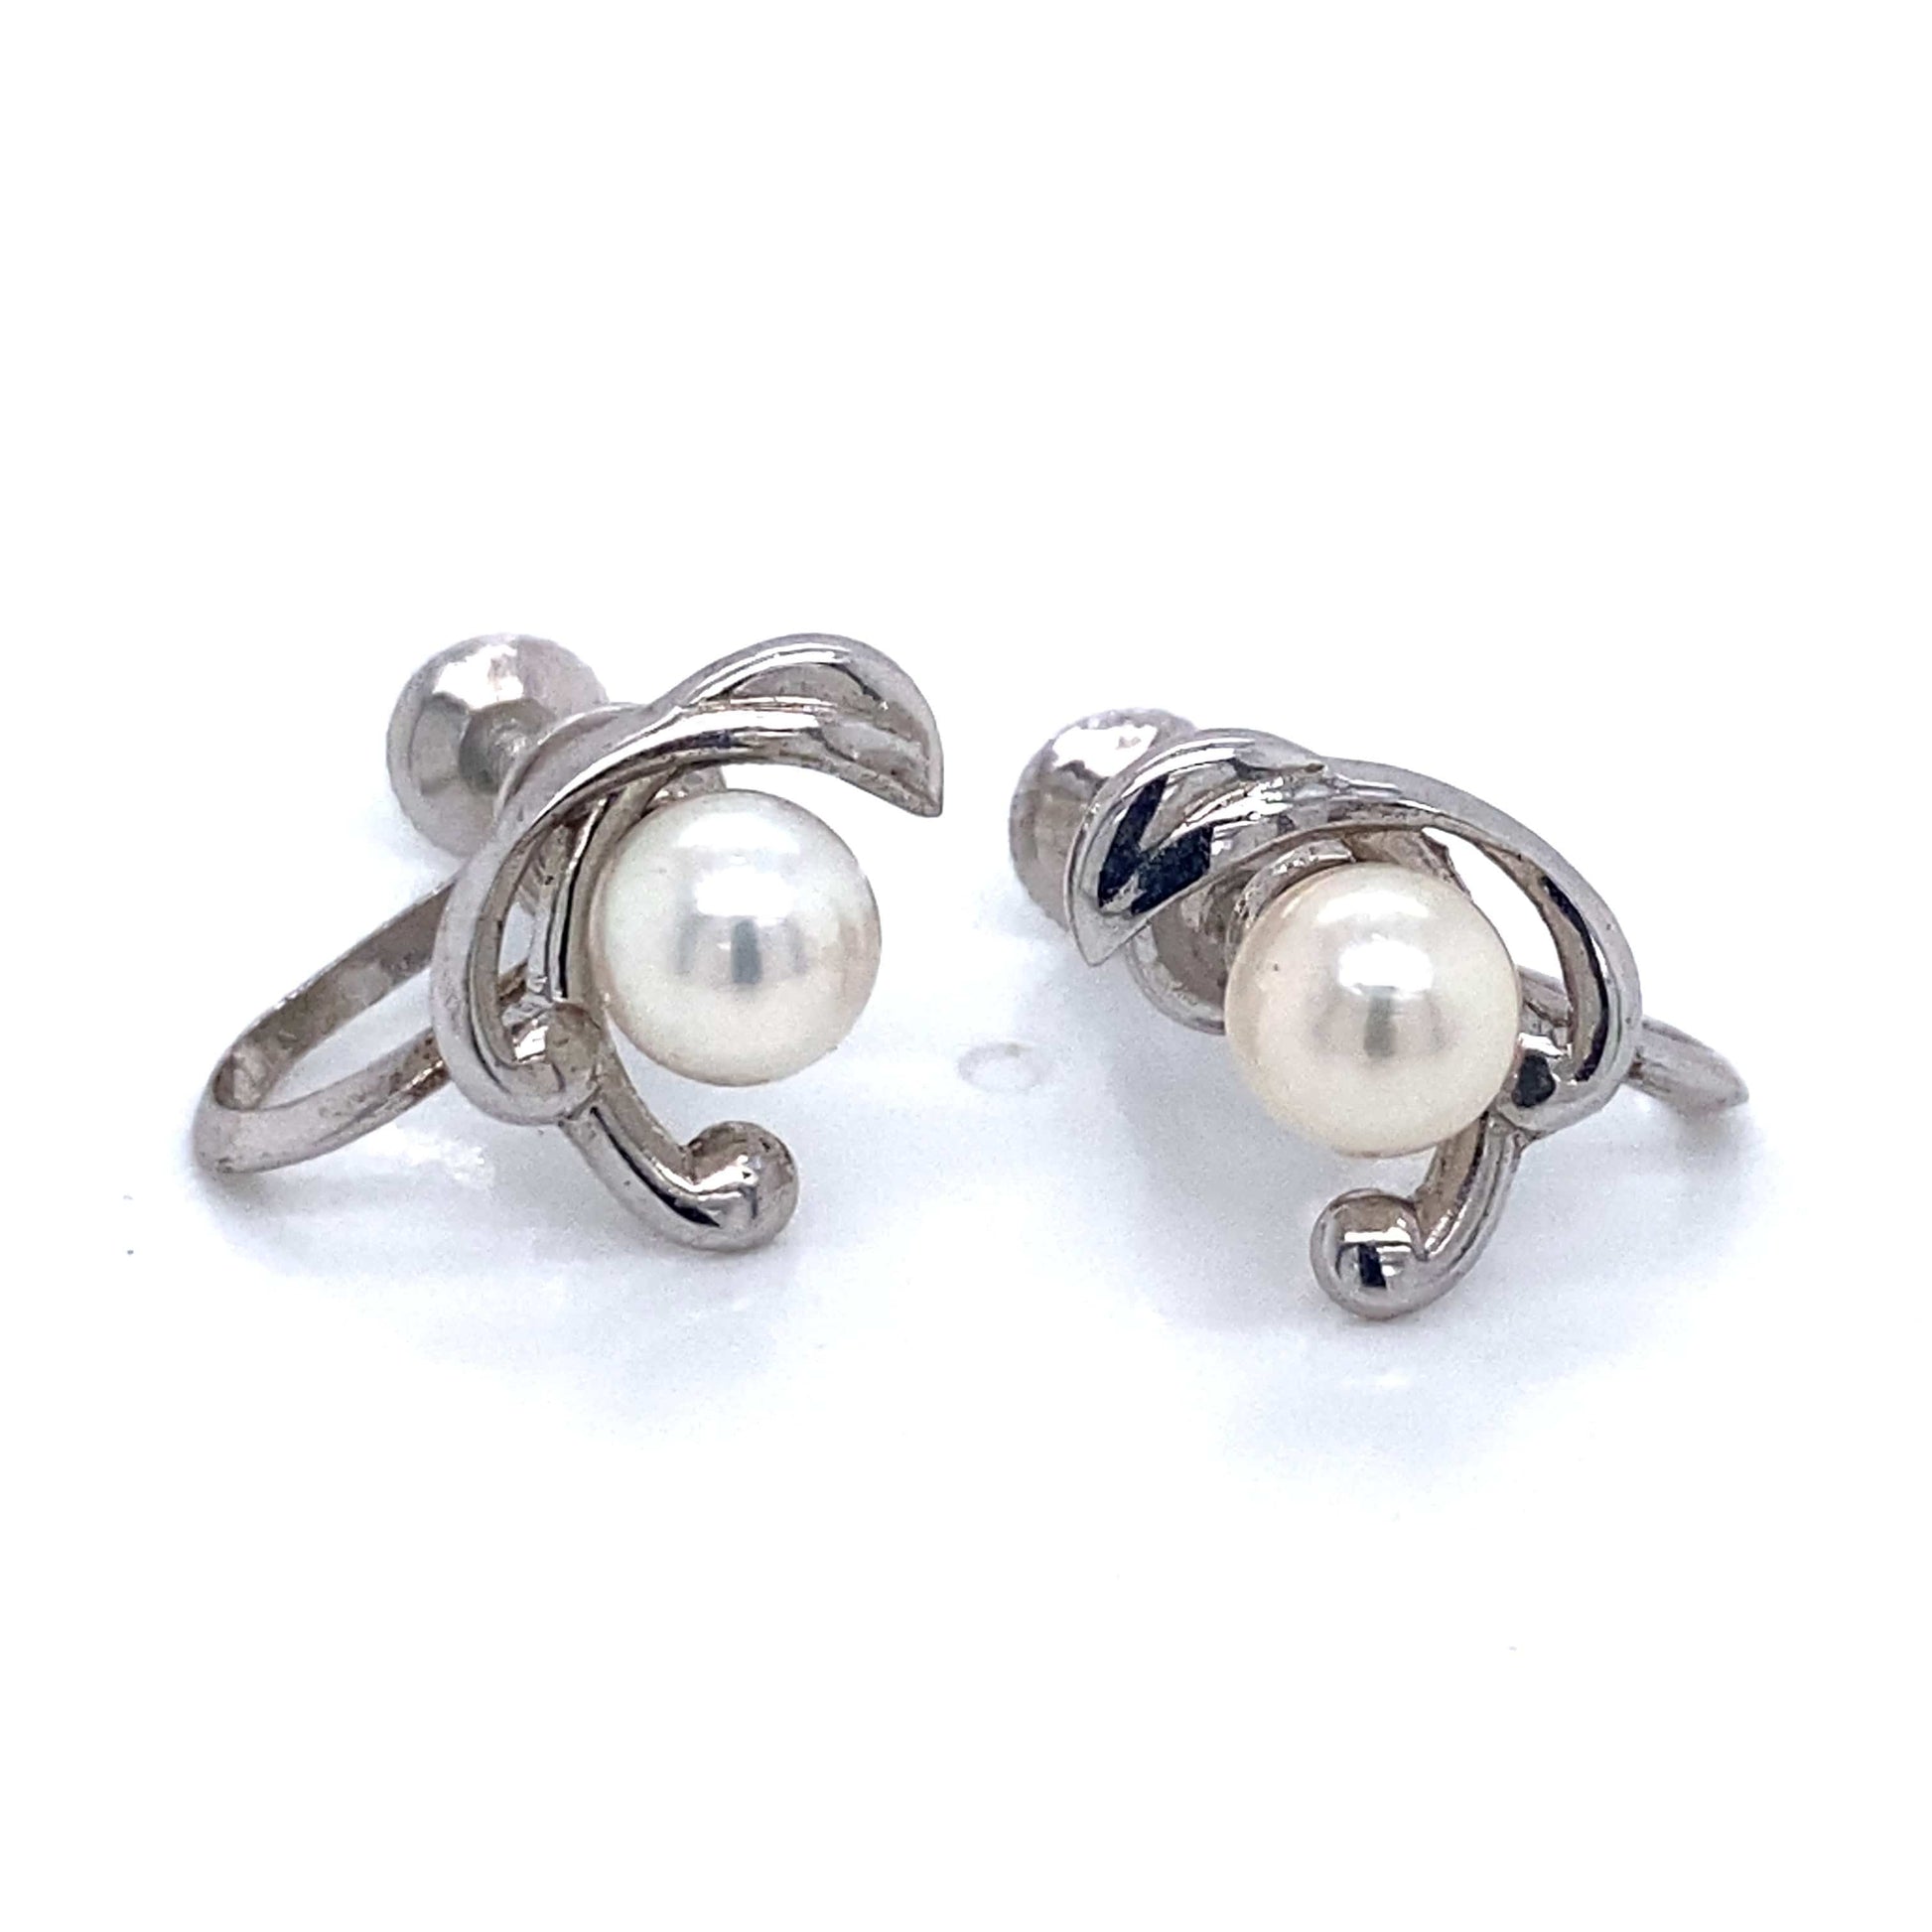 Mikimoto Estate Akoya Pearl Clip On Earrings Sterling Silver 6mm 3.53 Grams M173 - Certified Estate Jewelry